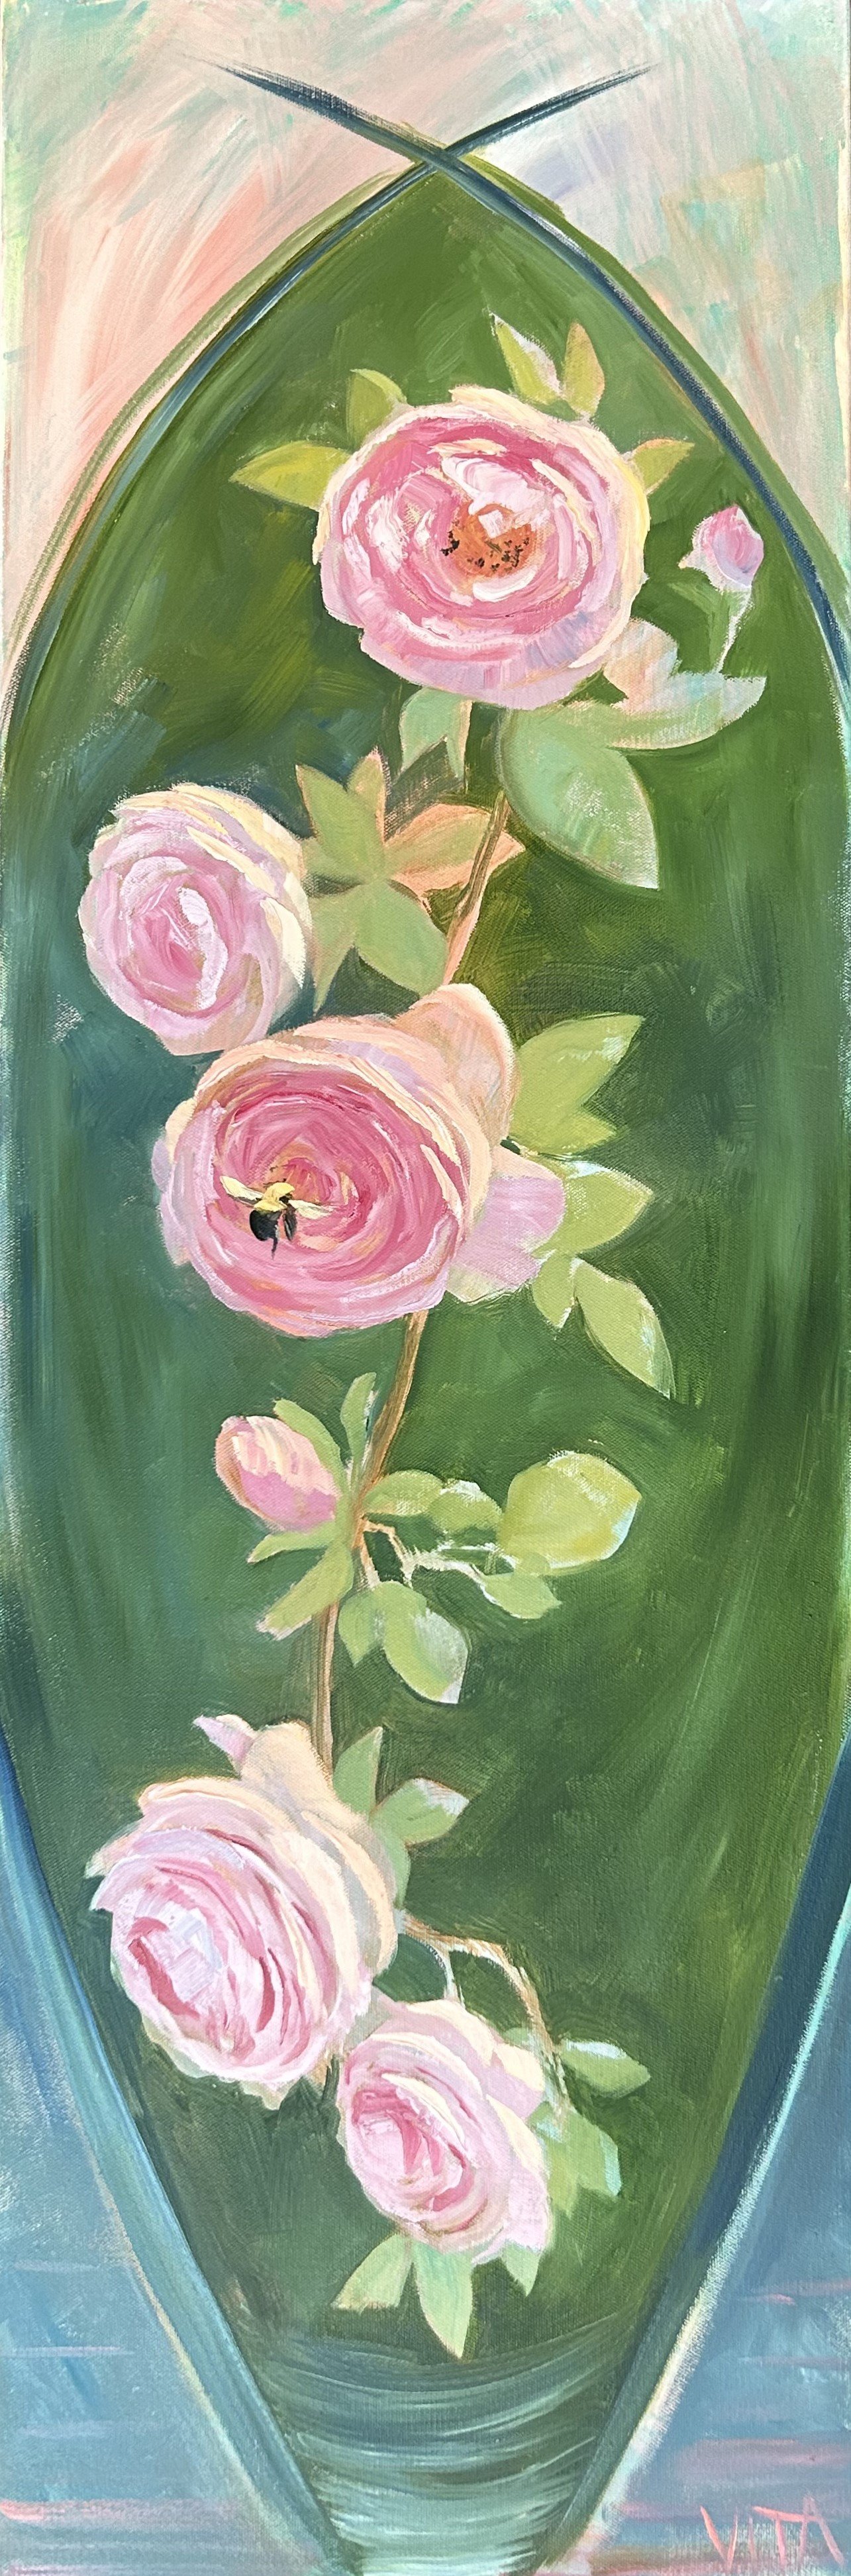 SOLD, The Bumblebee, Acrylic on Canvas, Copyright 2020 Hirschten